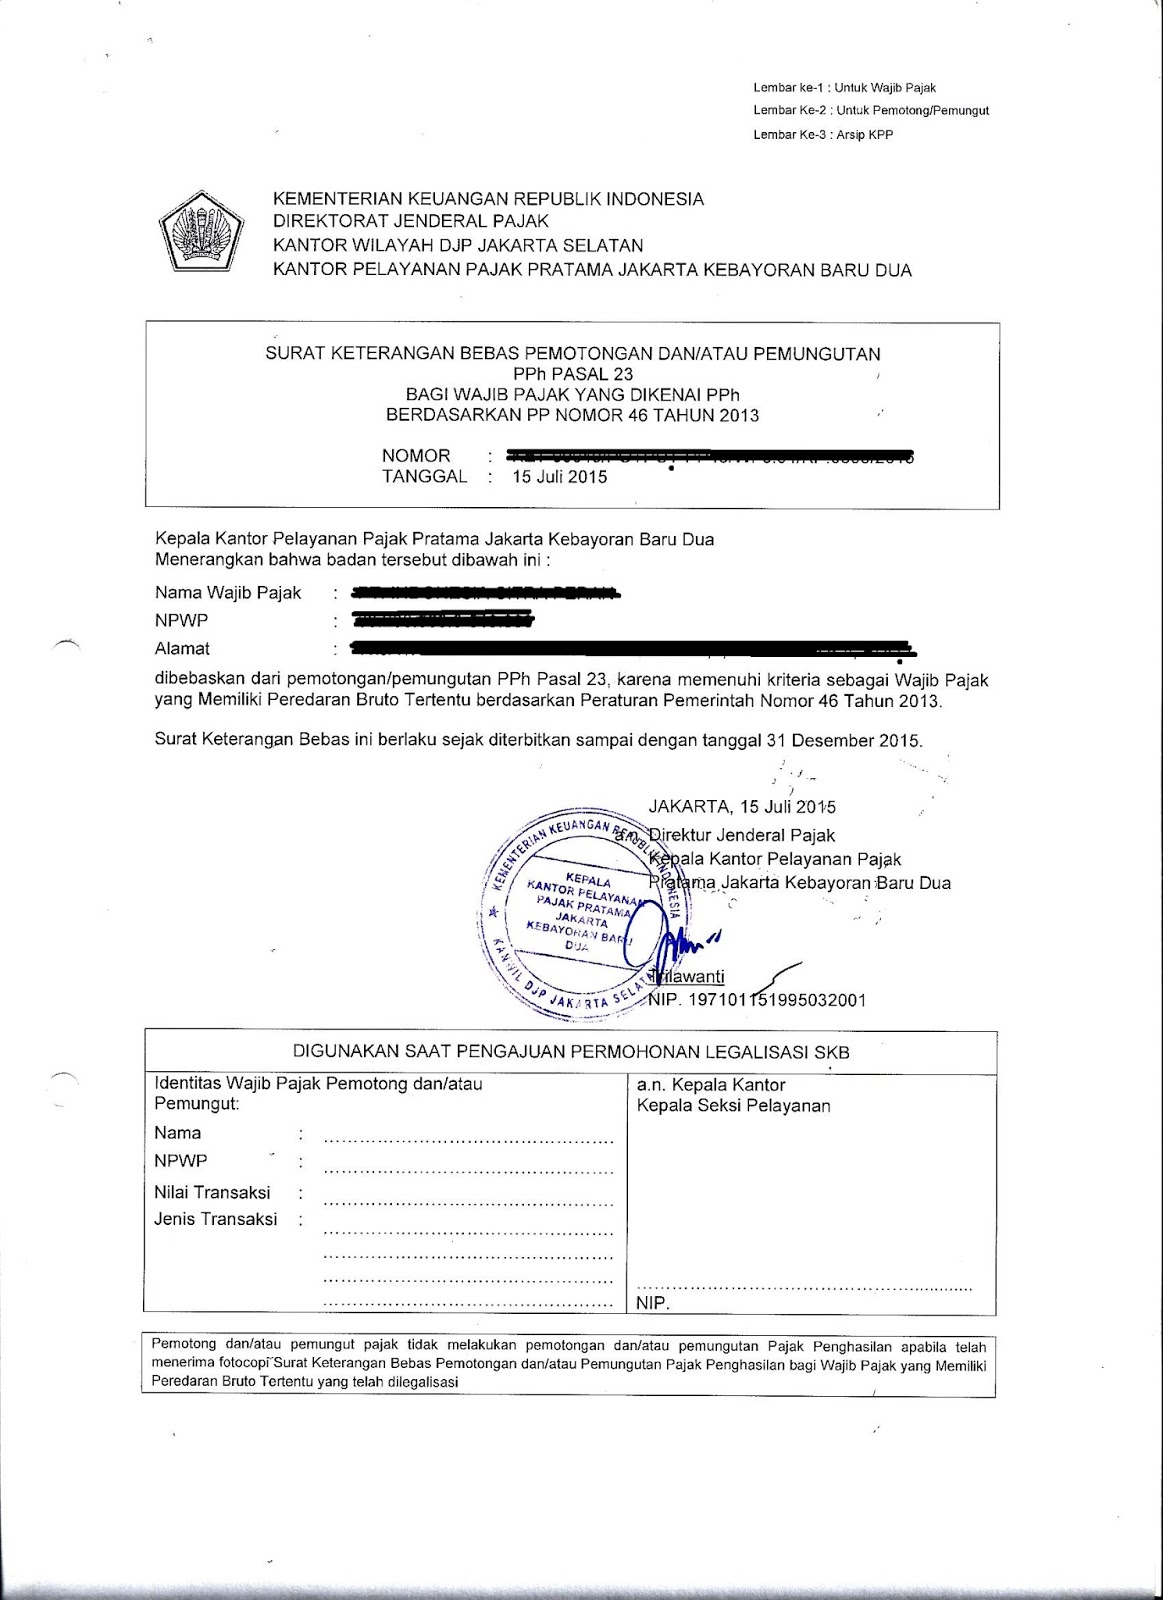 Contoh surat pembatalan faktur pajak - wood scribd indo